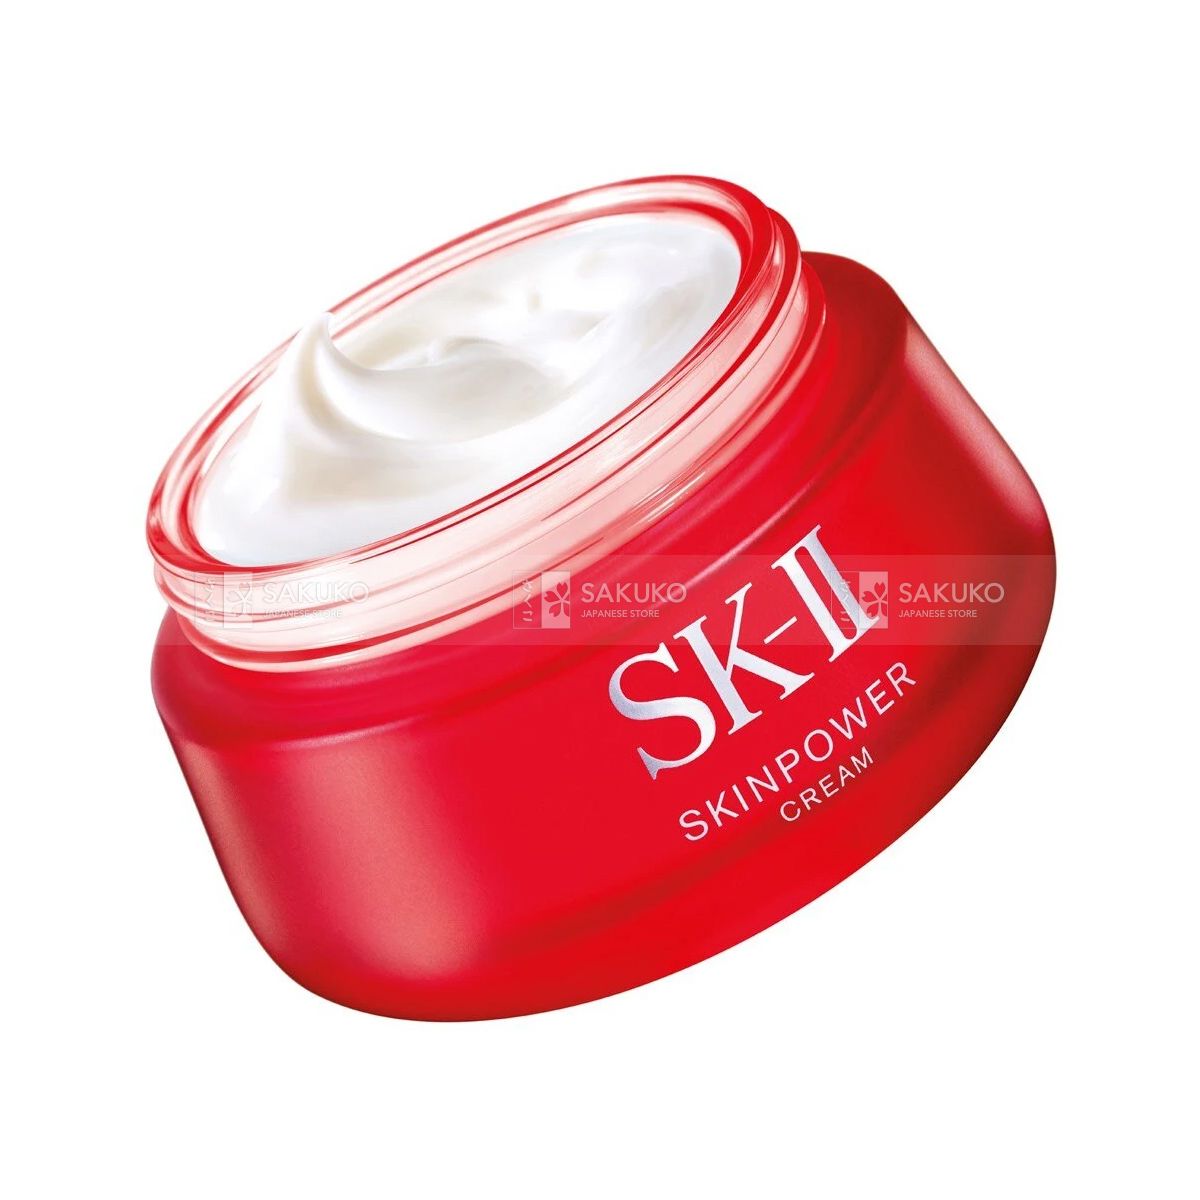  SK-II- Kem dưỡng Skin Power Cream 80g 